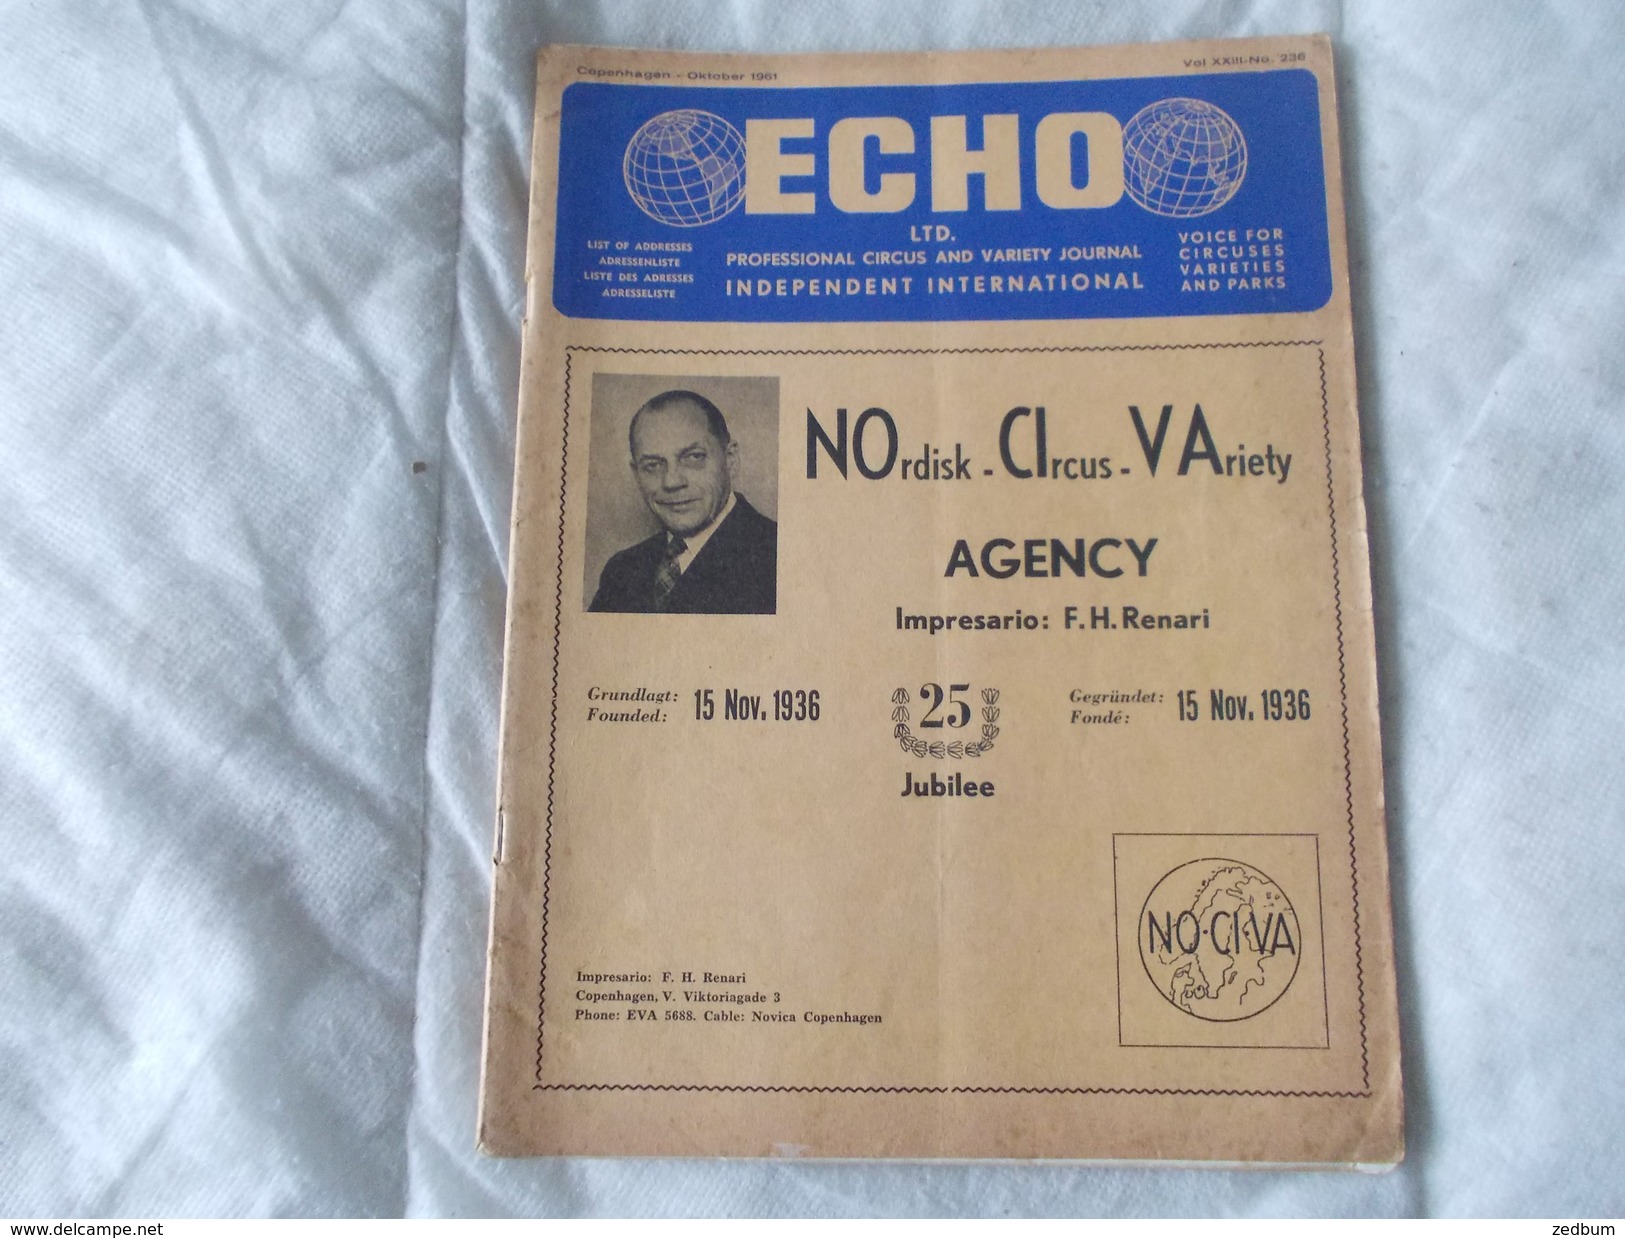 ECHO LTD Professional Circus And Variety Journal Independent International N° 236 October 1961 - Divertissement